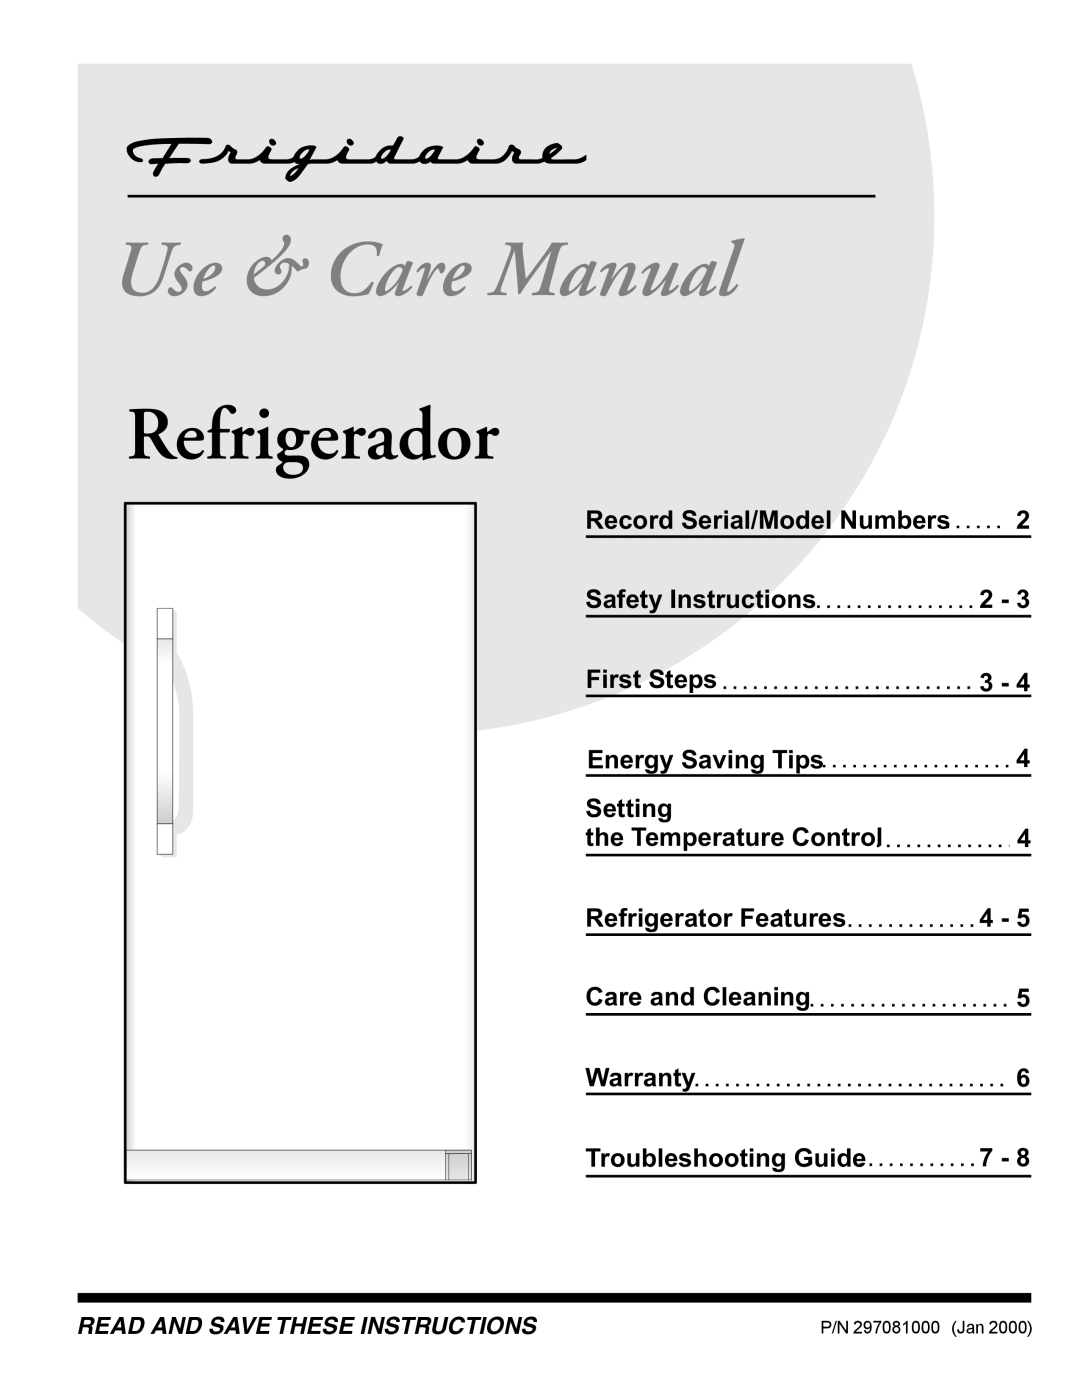 Frigidaire 297081000 warranty Use & Care Manual, Refrigerador 